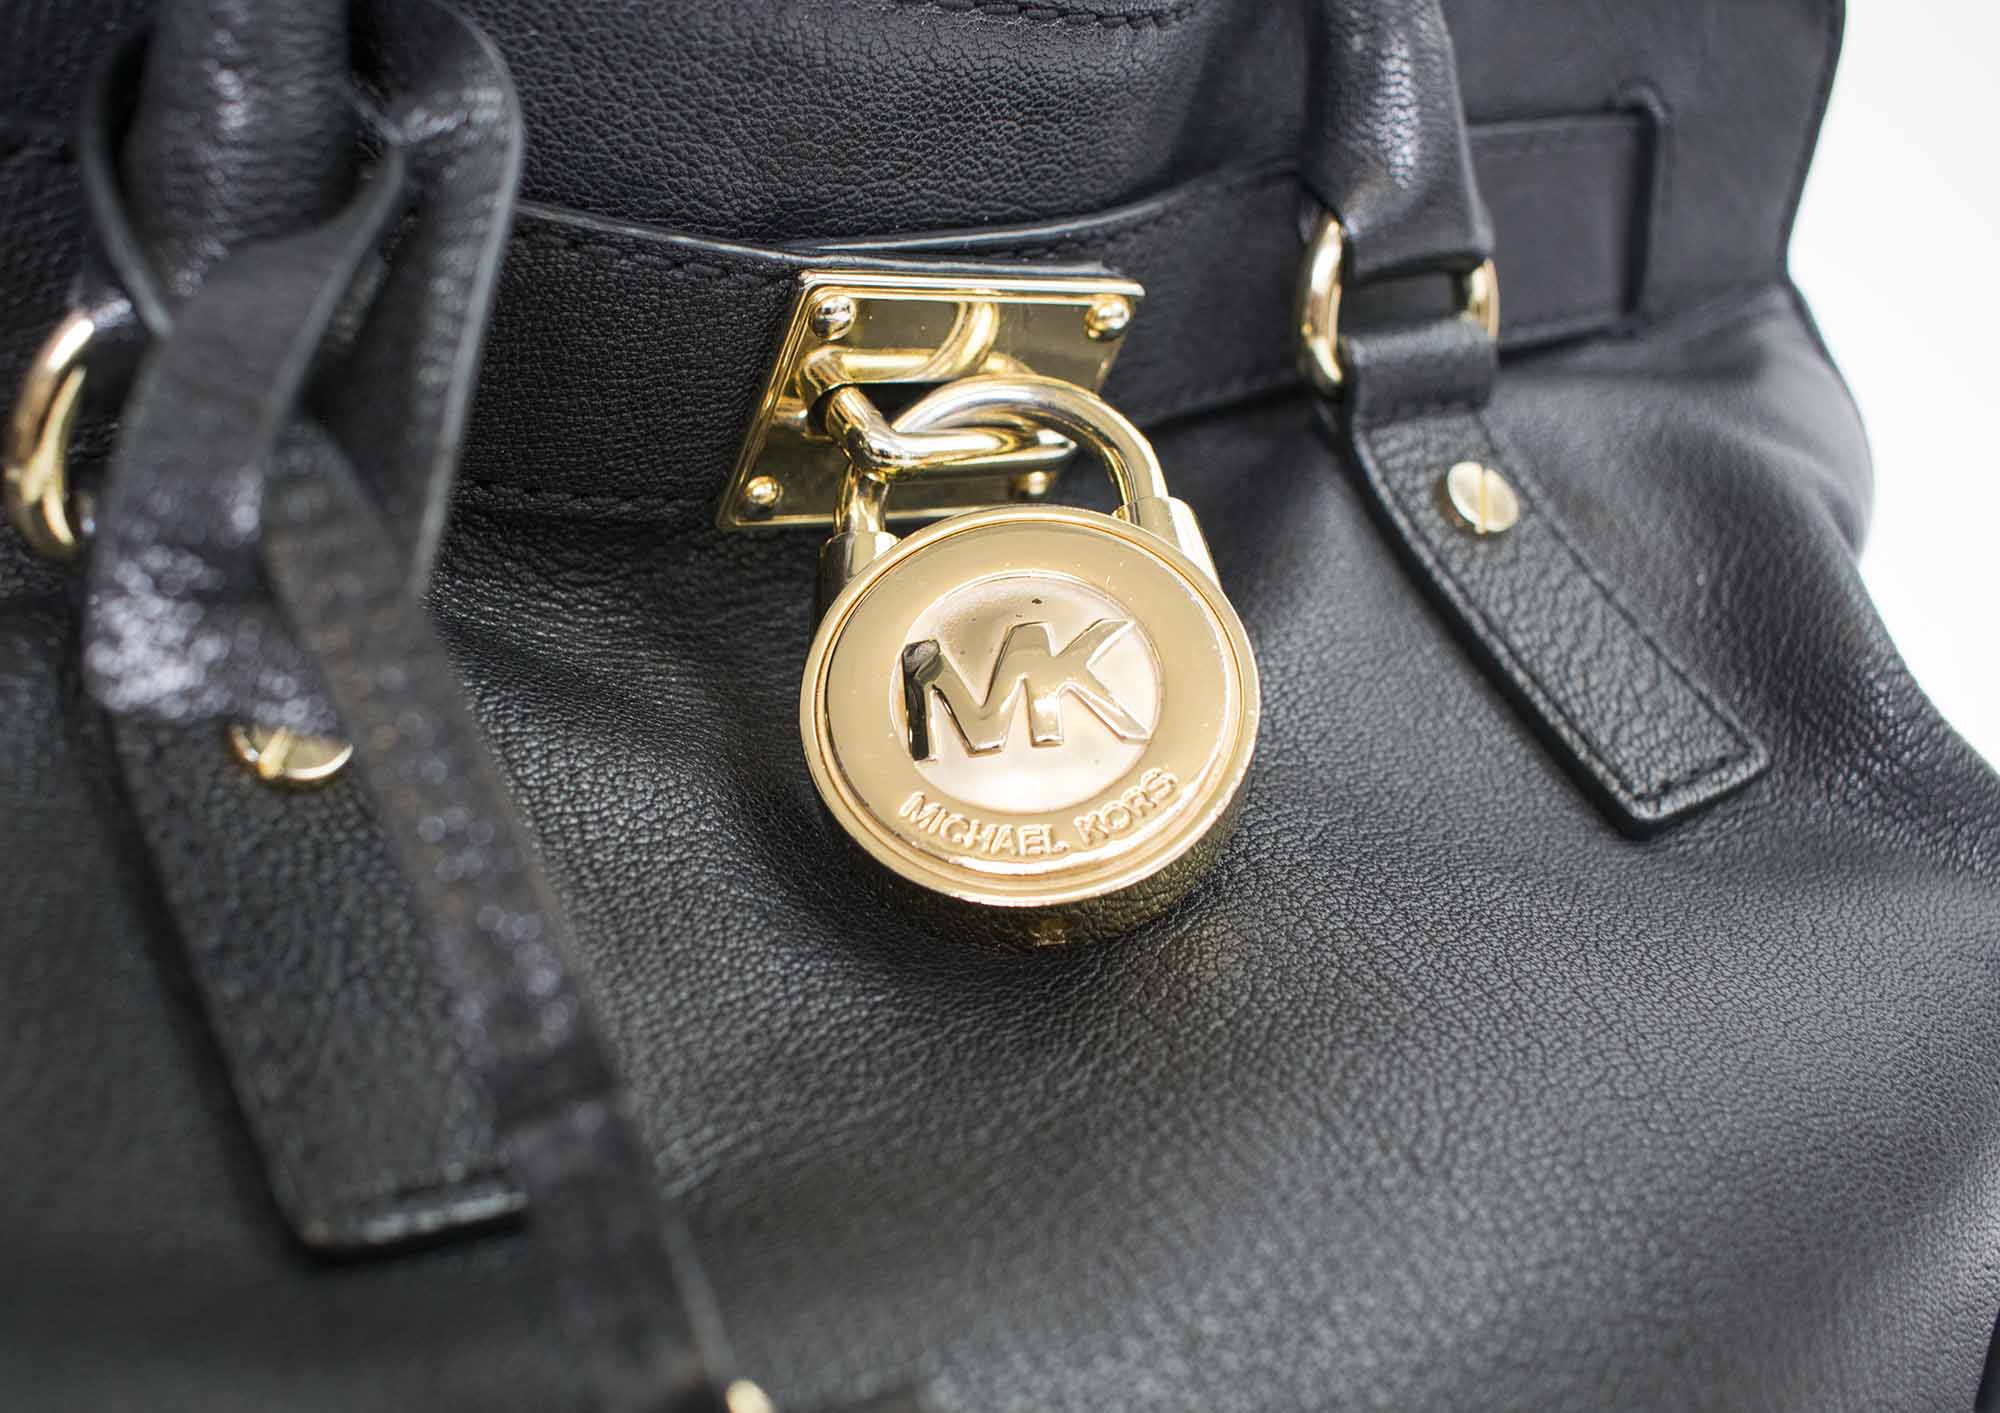 michael kors black satchel with gold chain